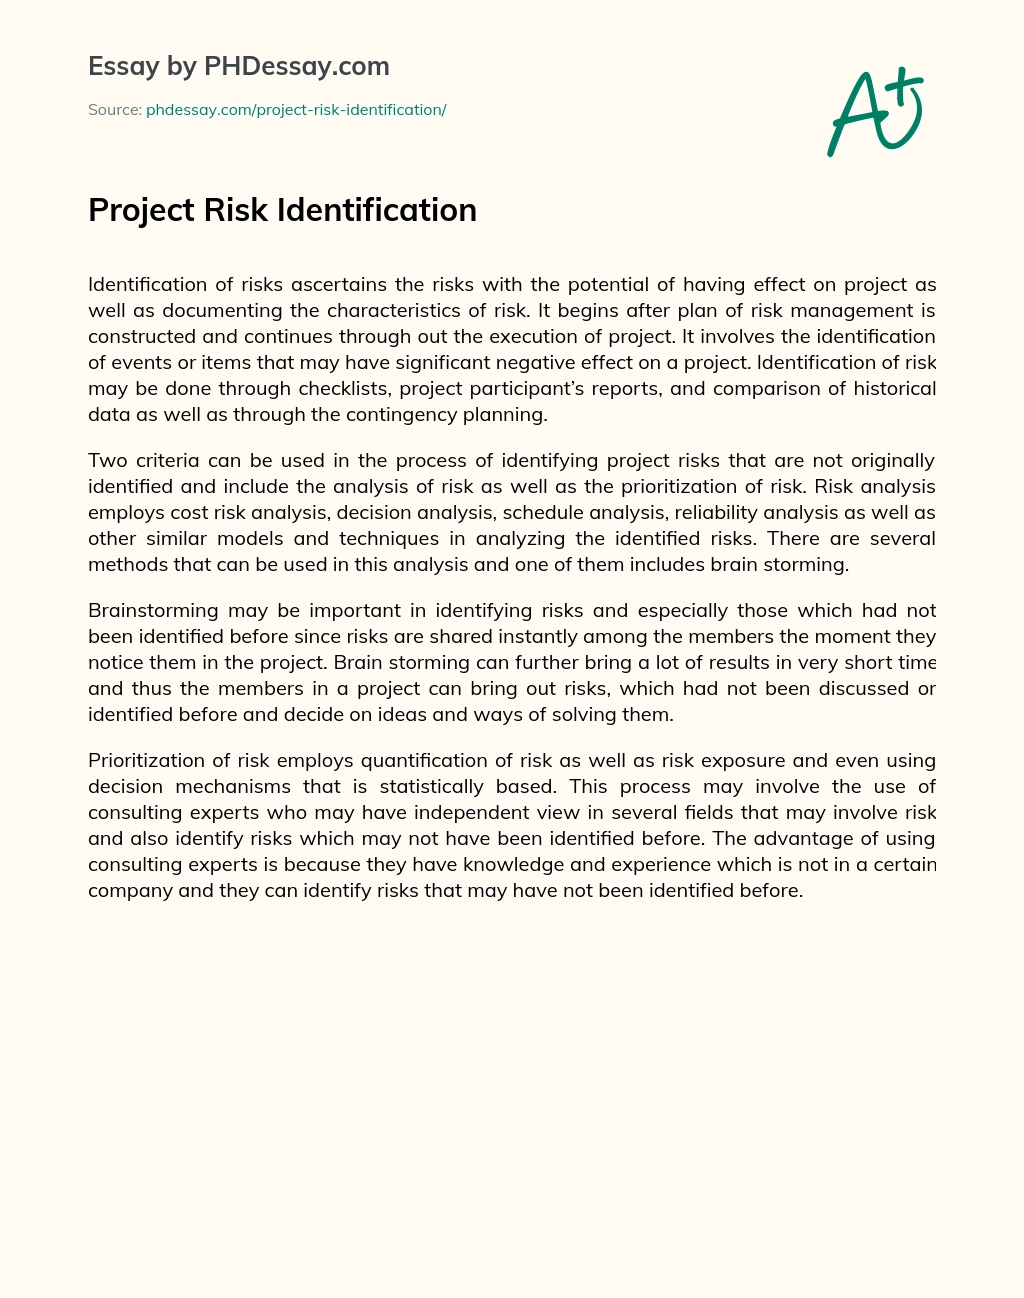 Project Risk Identification essay